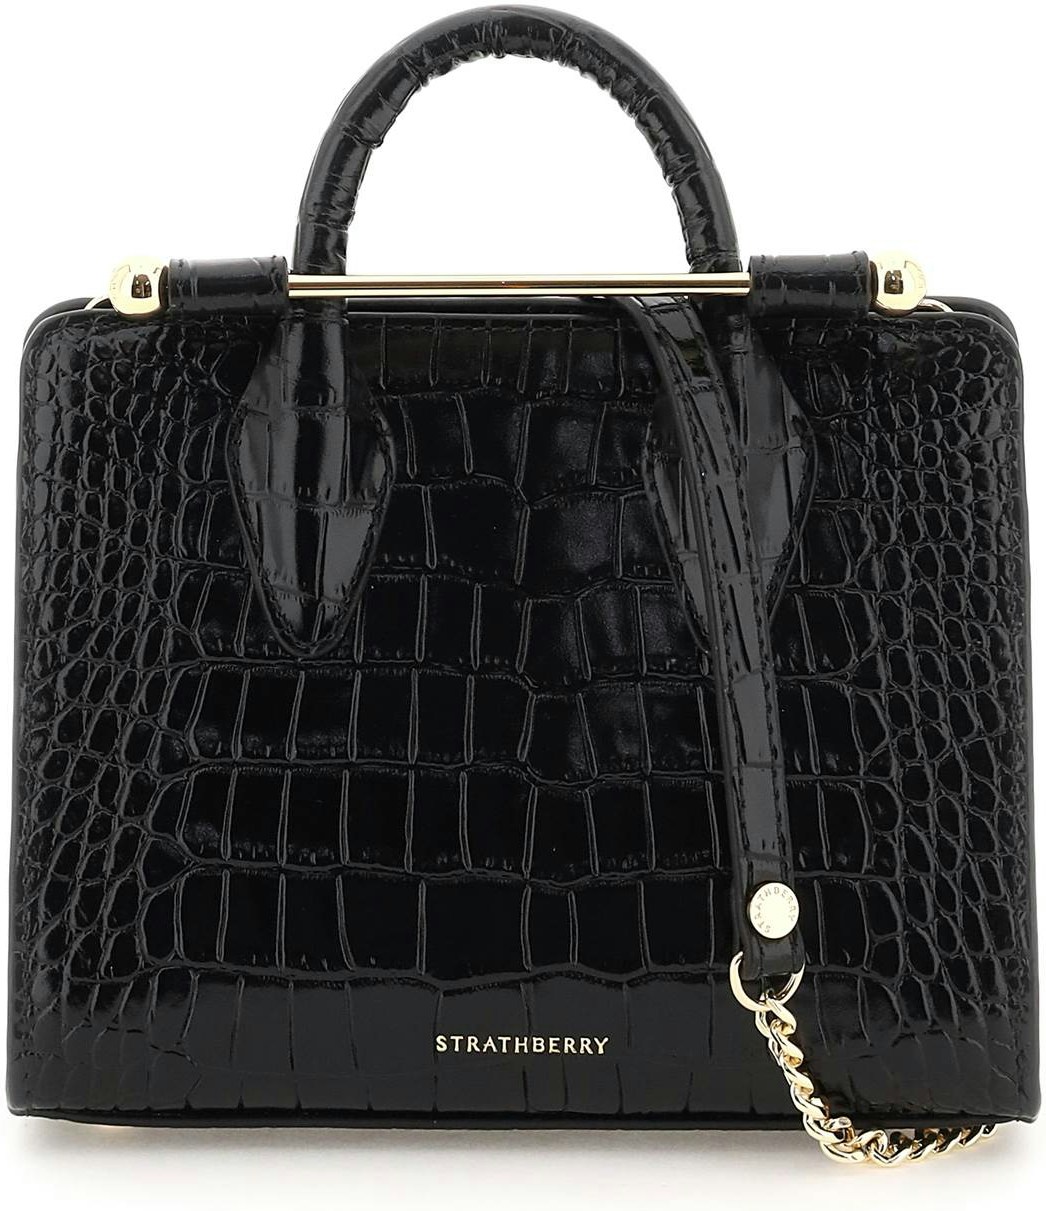 Strathberry Leather Tote Handbag